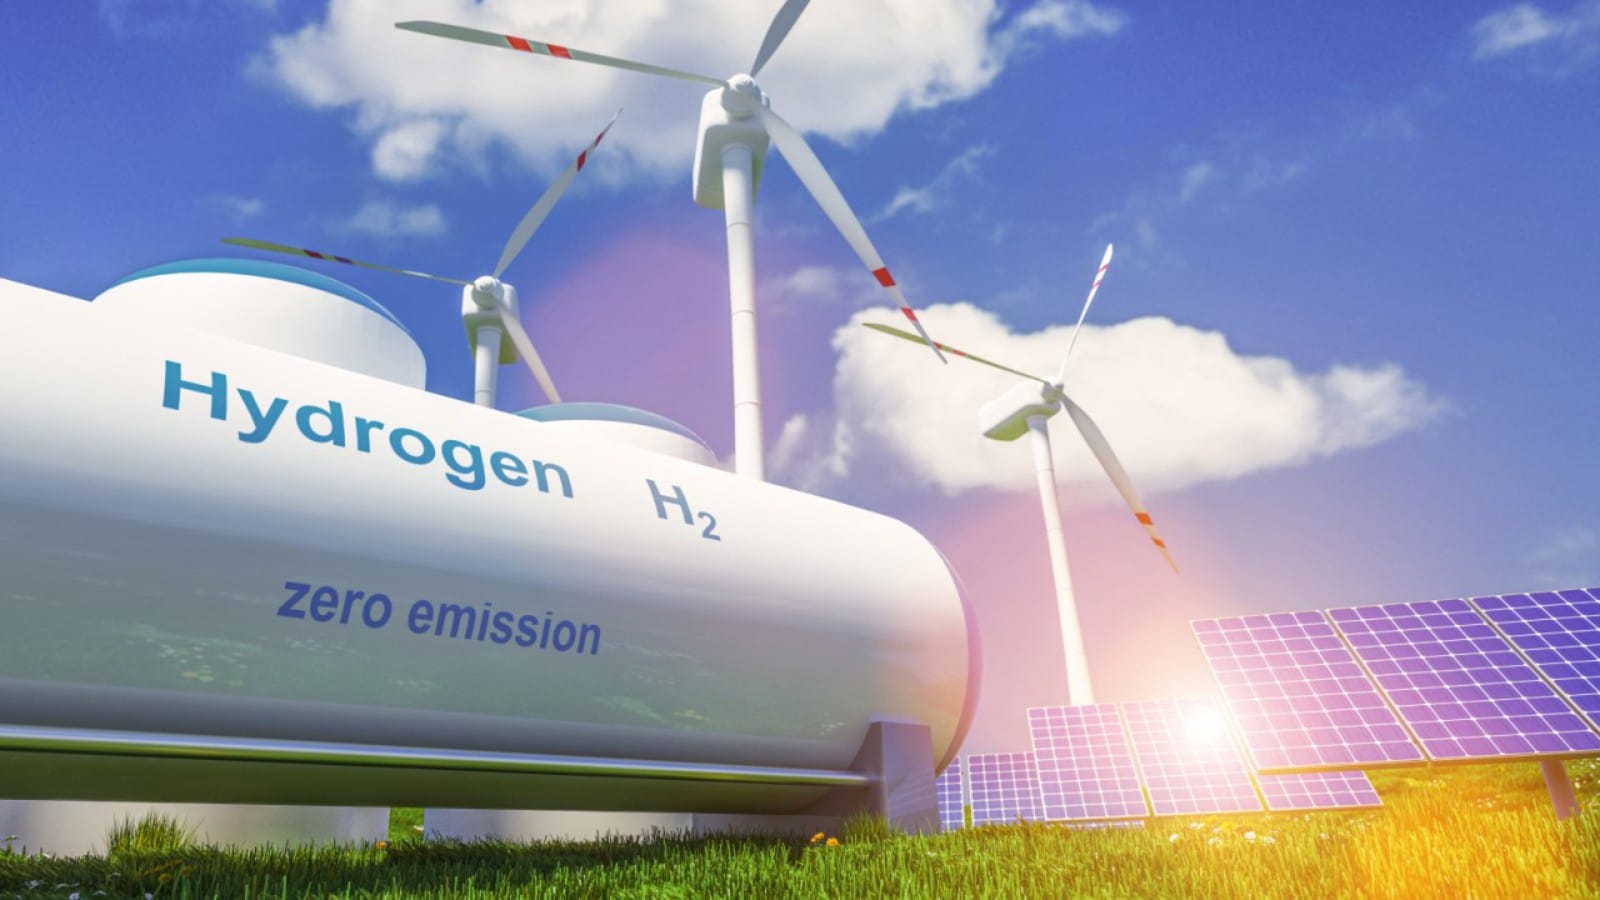 Bosch is developing hydrogen components